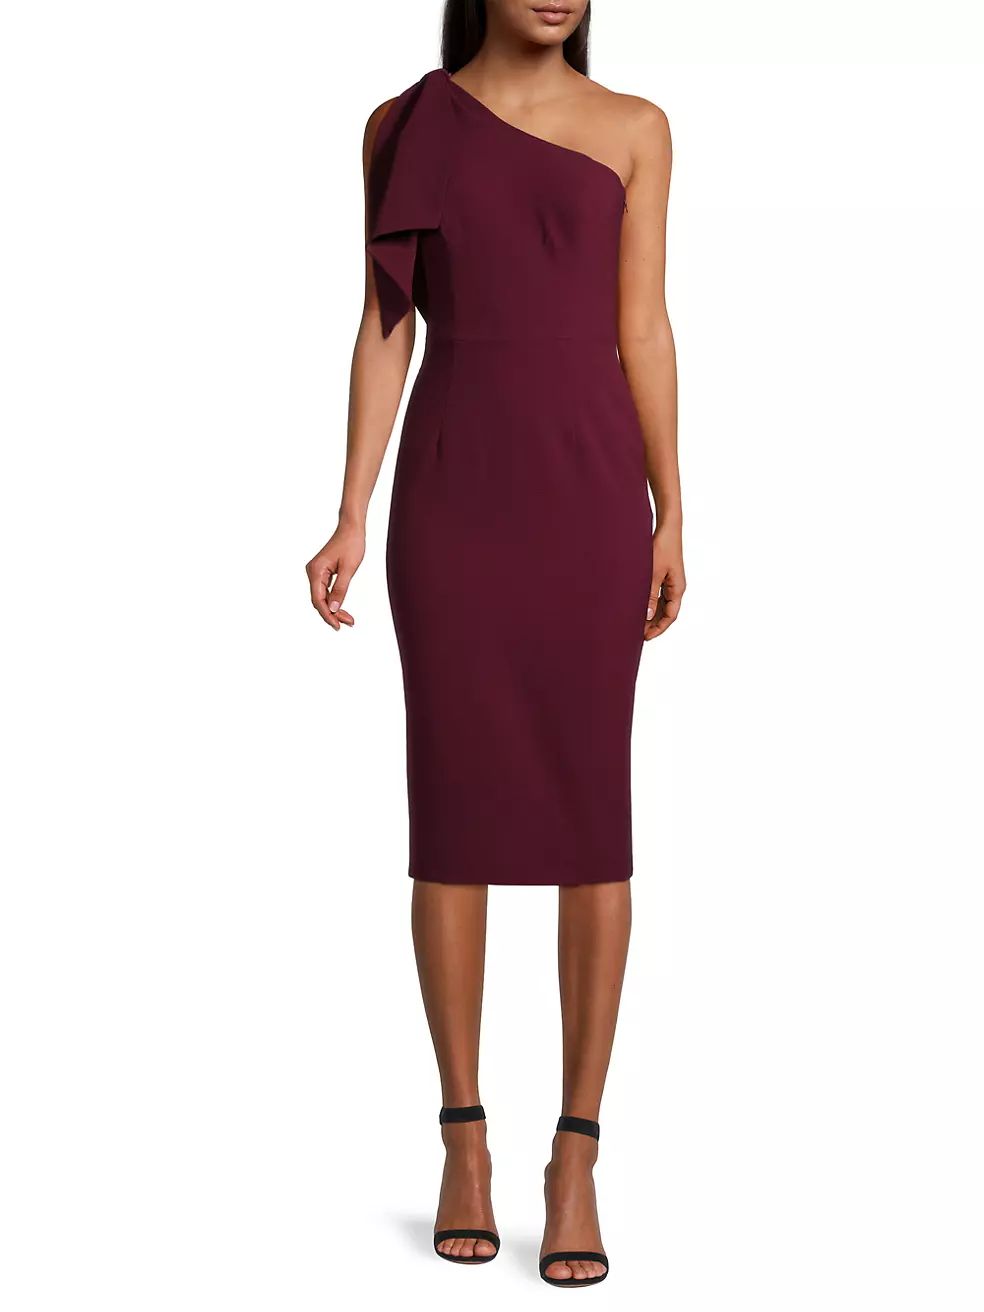 Tiffany One-Shoulder Dress | Saks Fifth Avenue